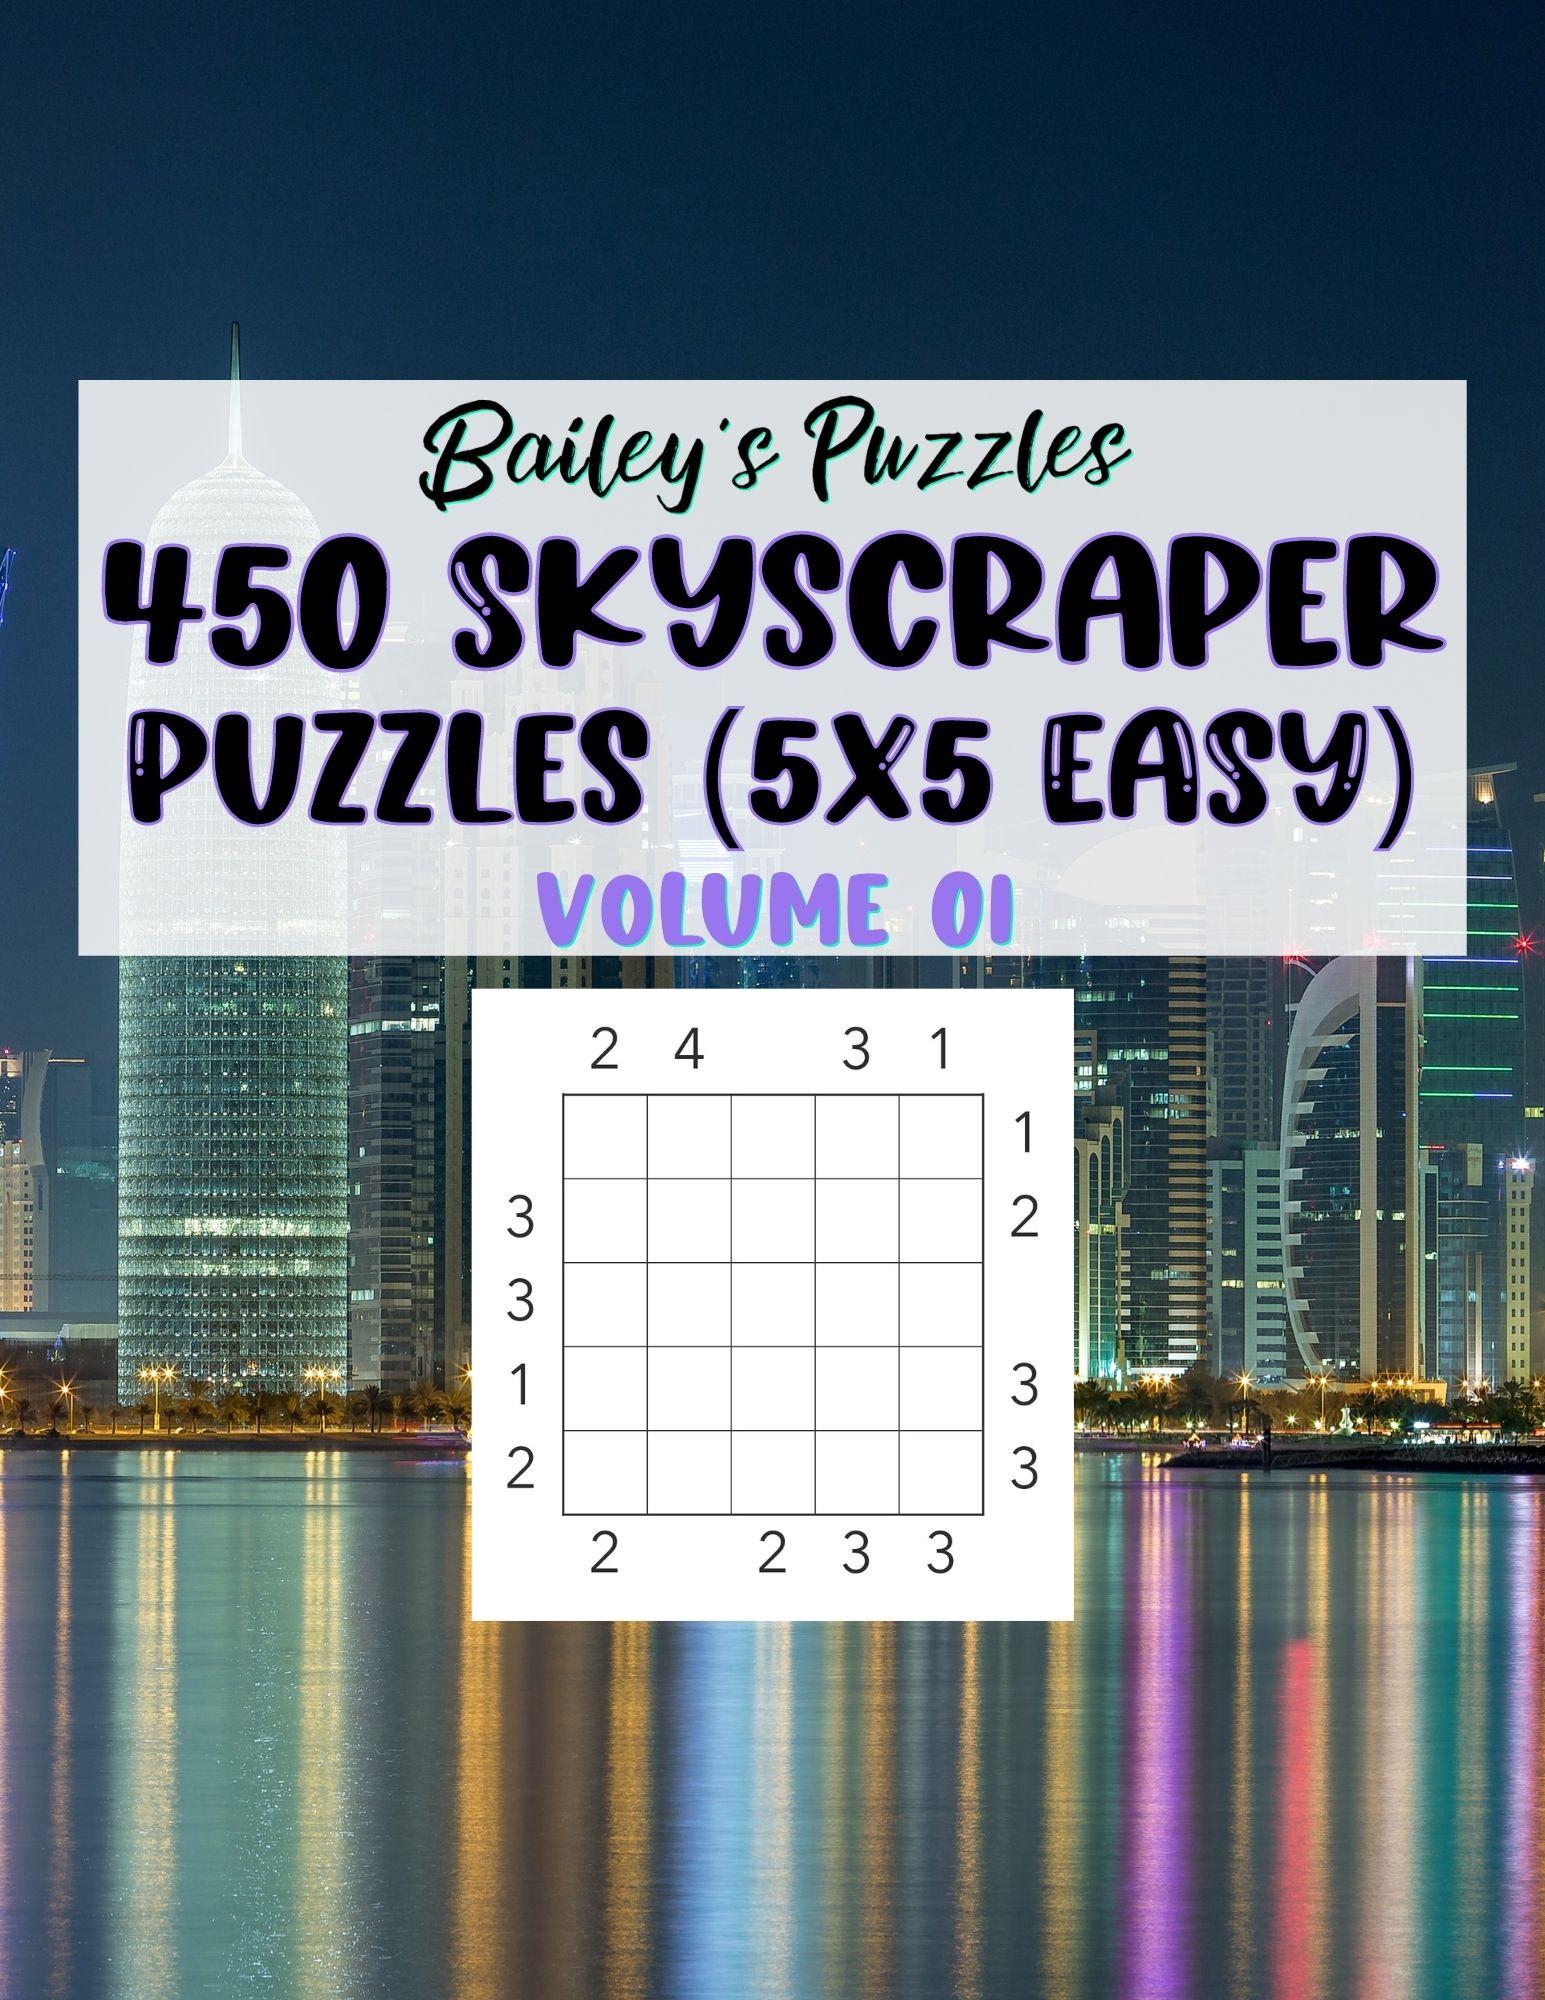 Front Cover - 450 Skyscraper Puzzles (5x5, easy)